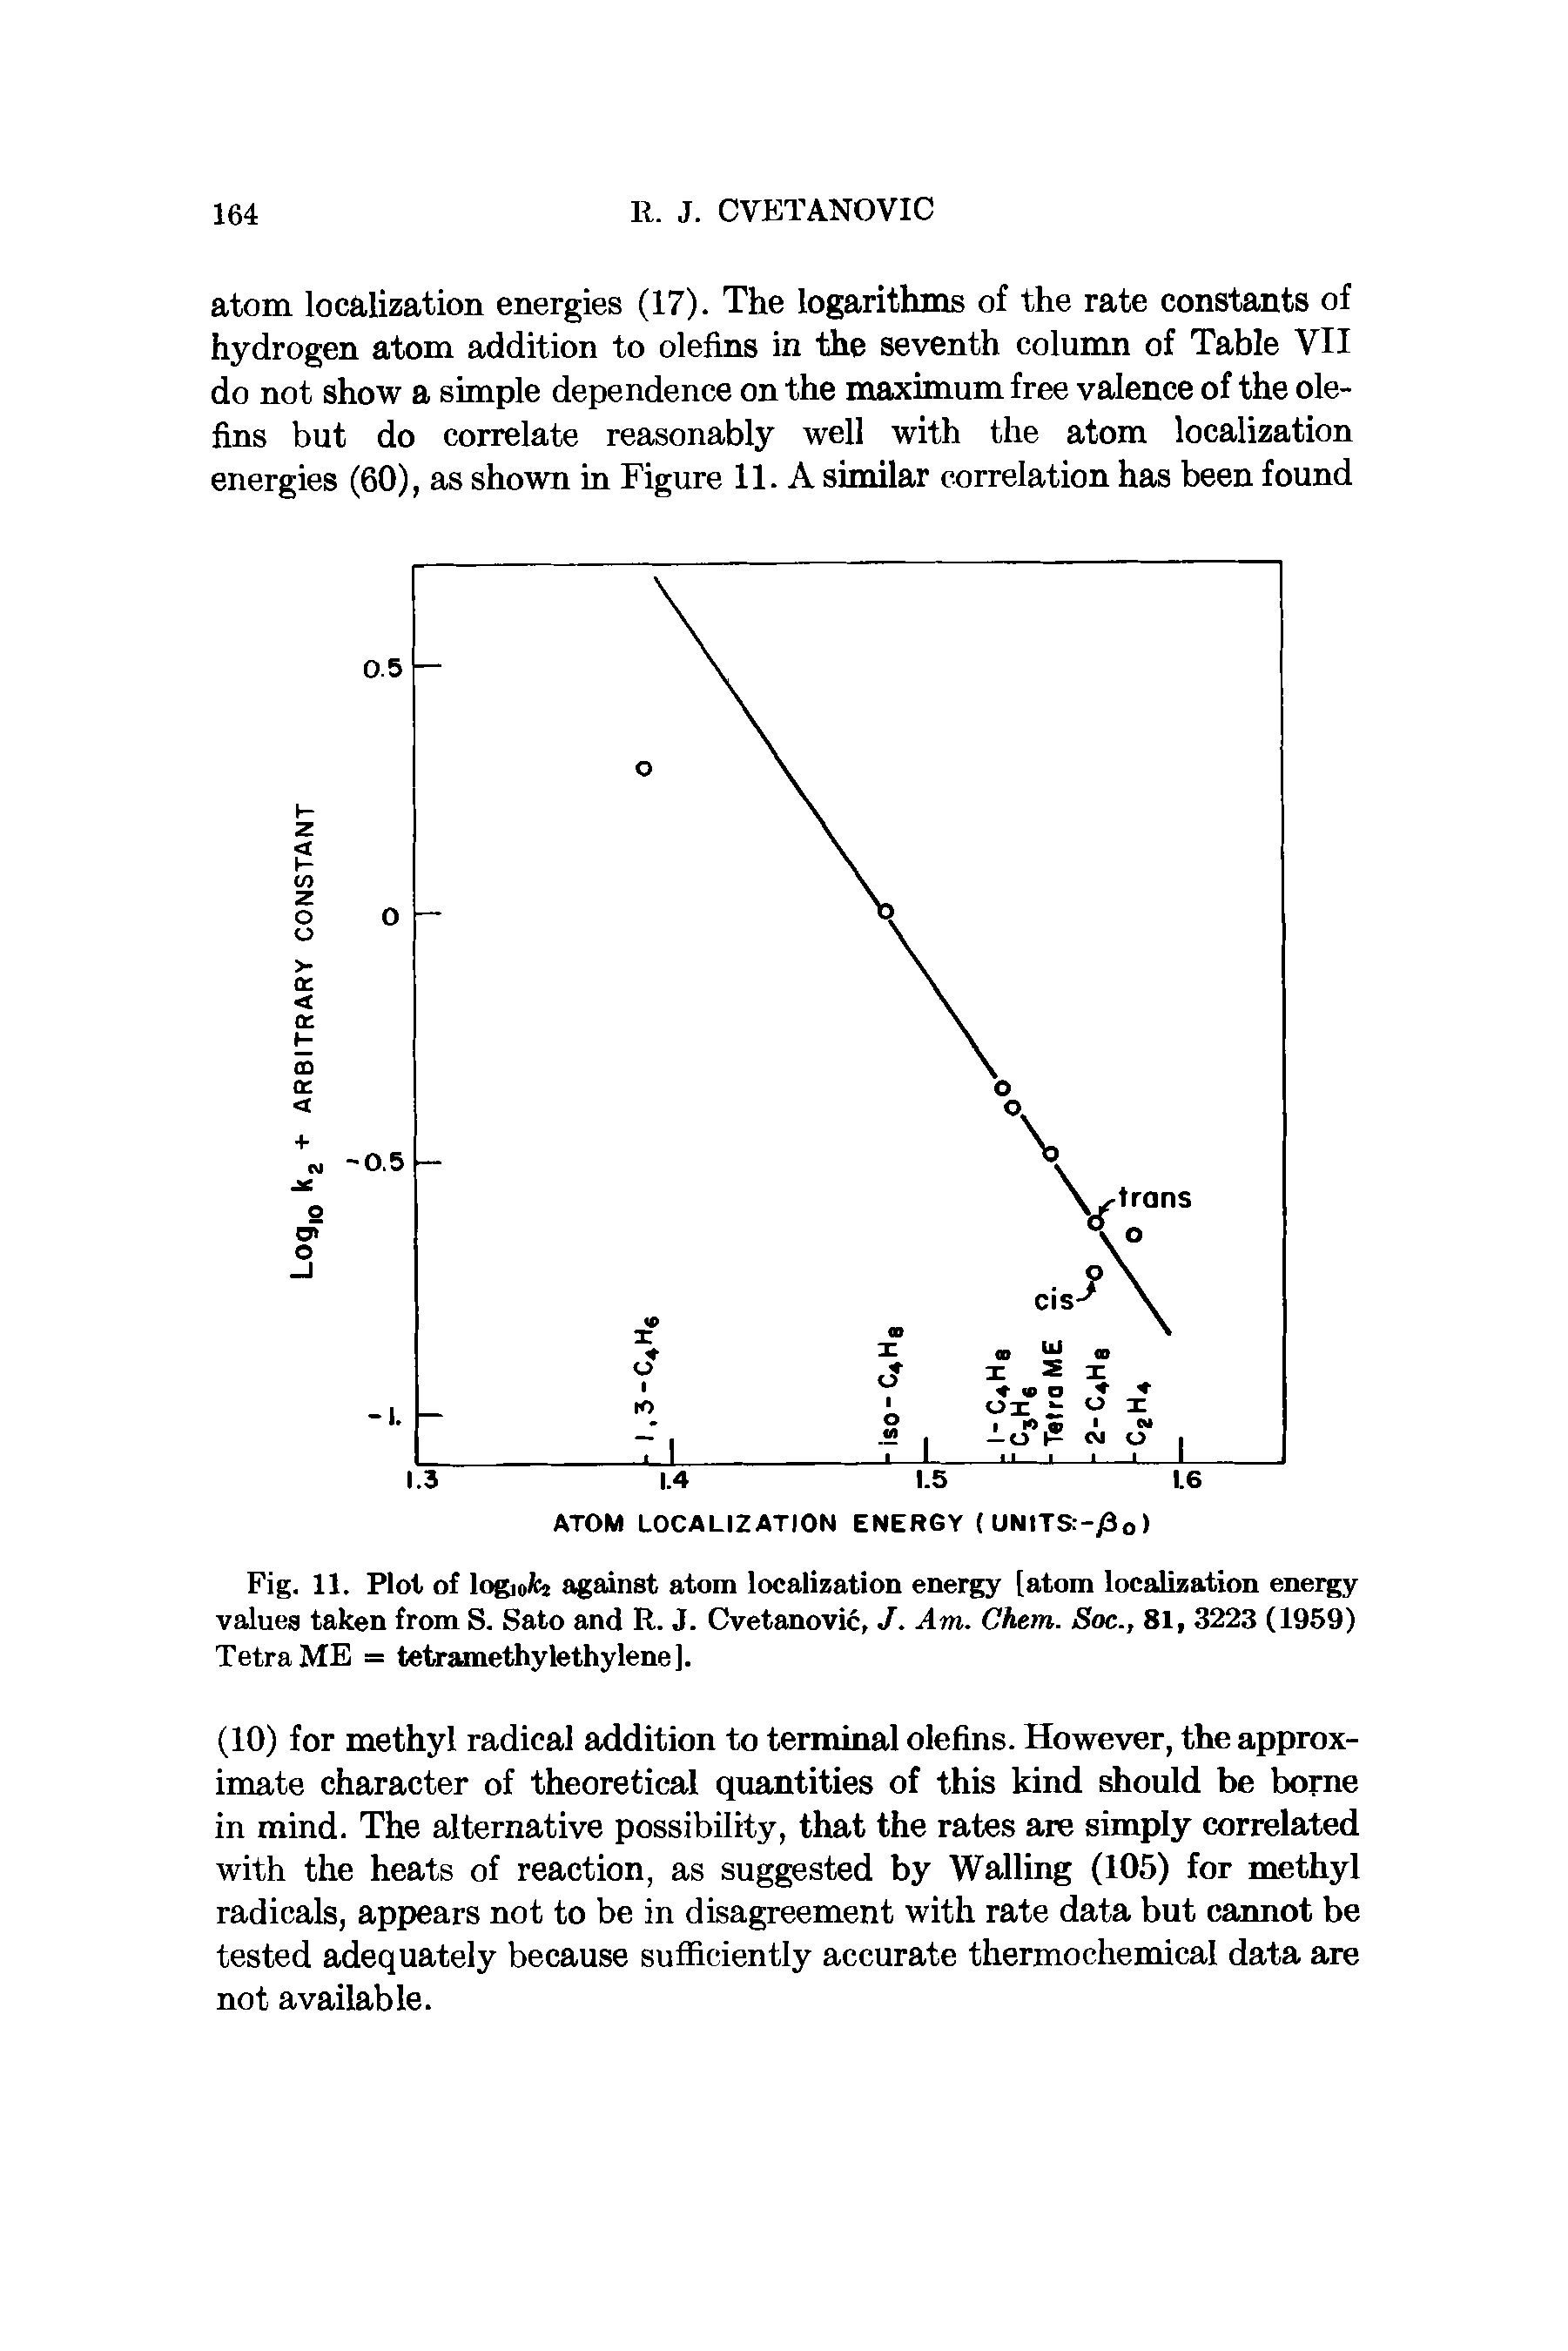 Fig. 11. Plot of logiofo against atom localization energy [atom localization energy values taken from S. Sato and R. J. Cvetanovic, J. Am. Chem. Soc., 81, 3223 (1959) TetraME = tetramethylethylene].